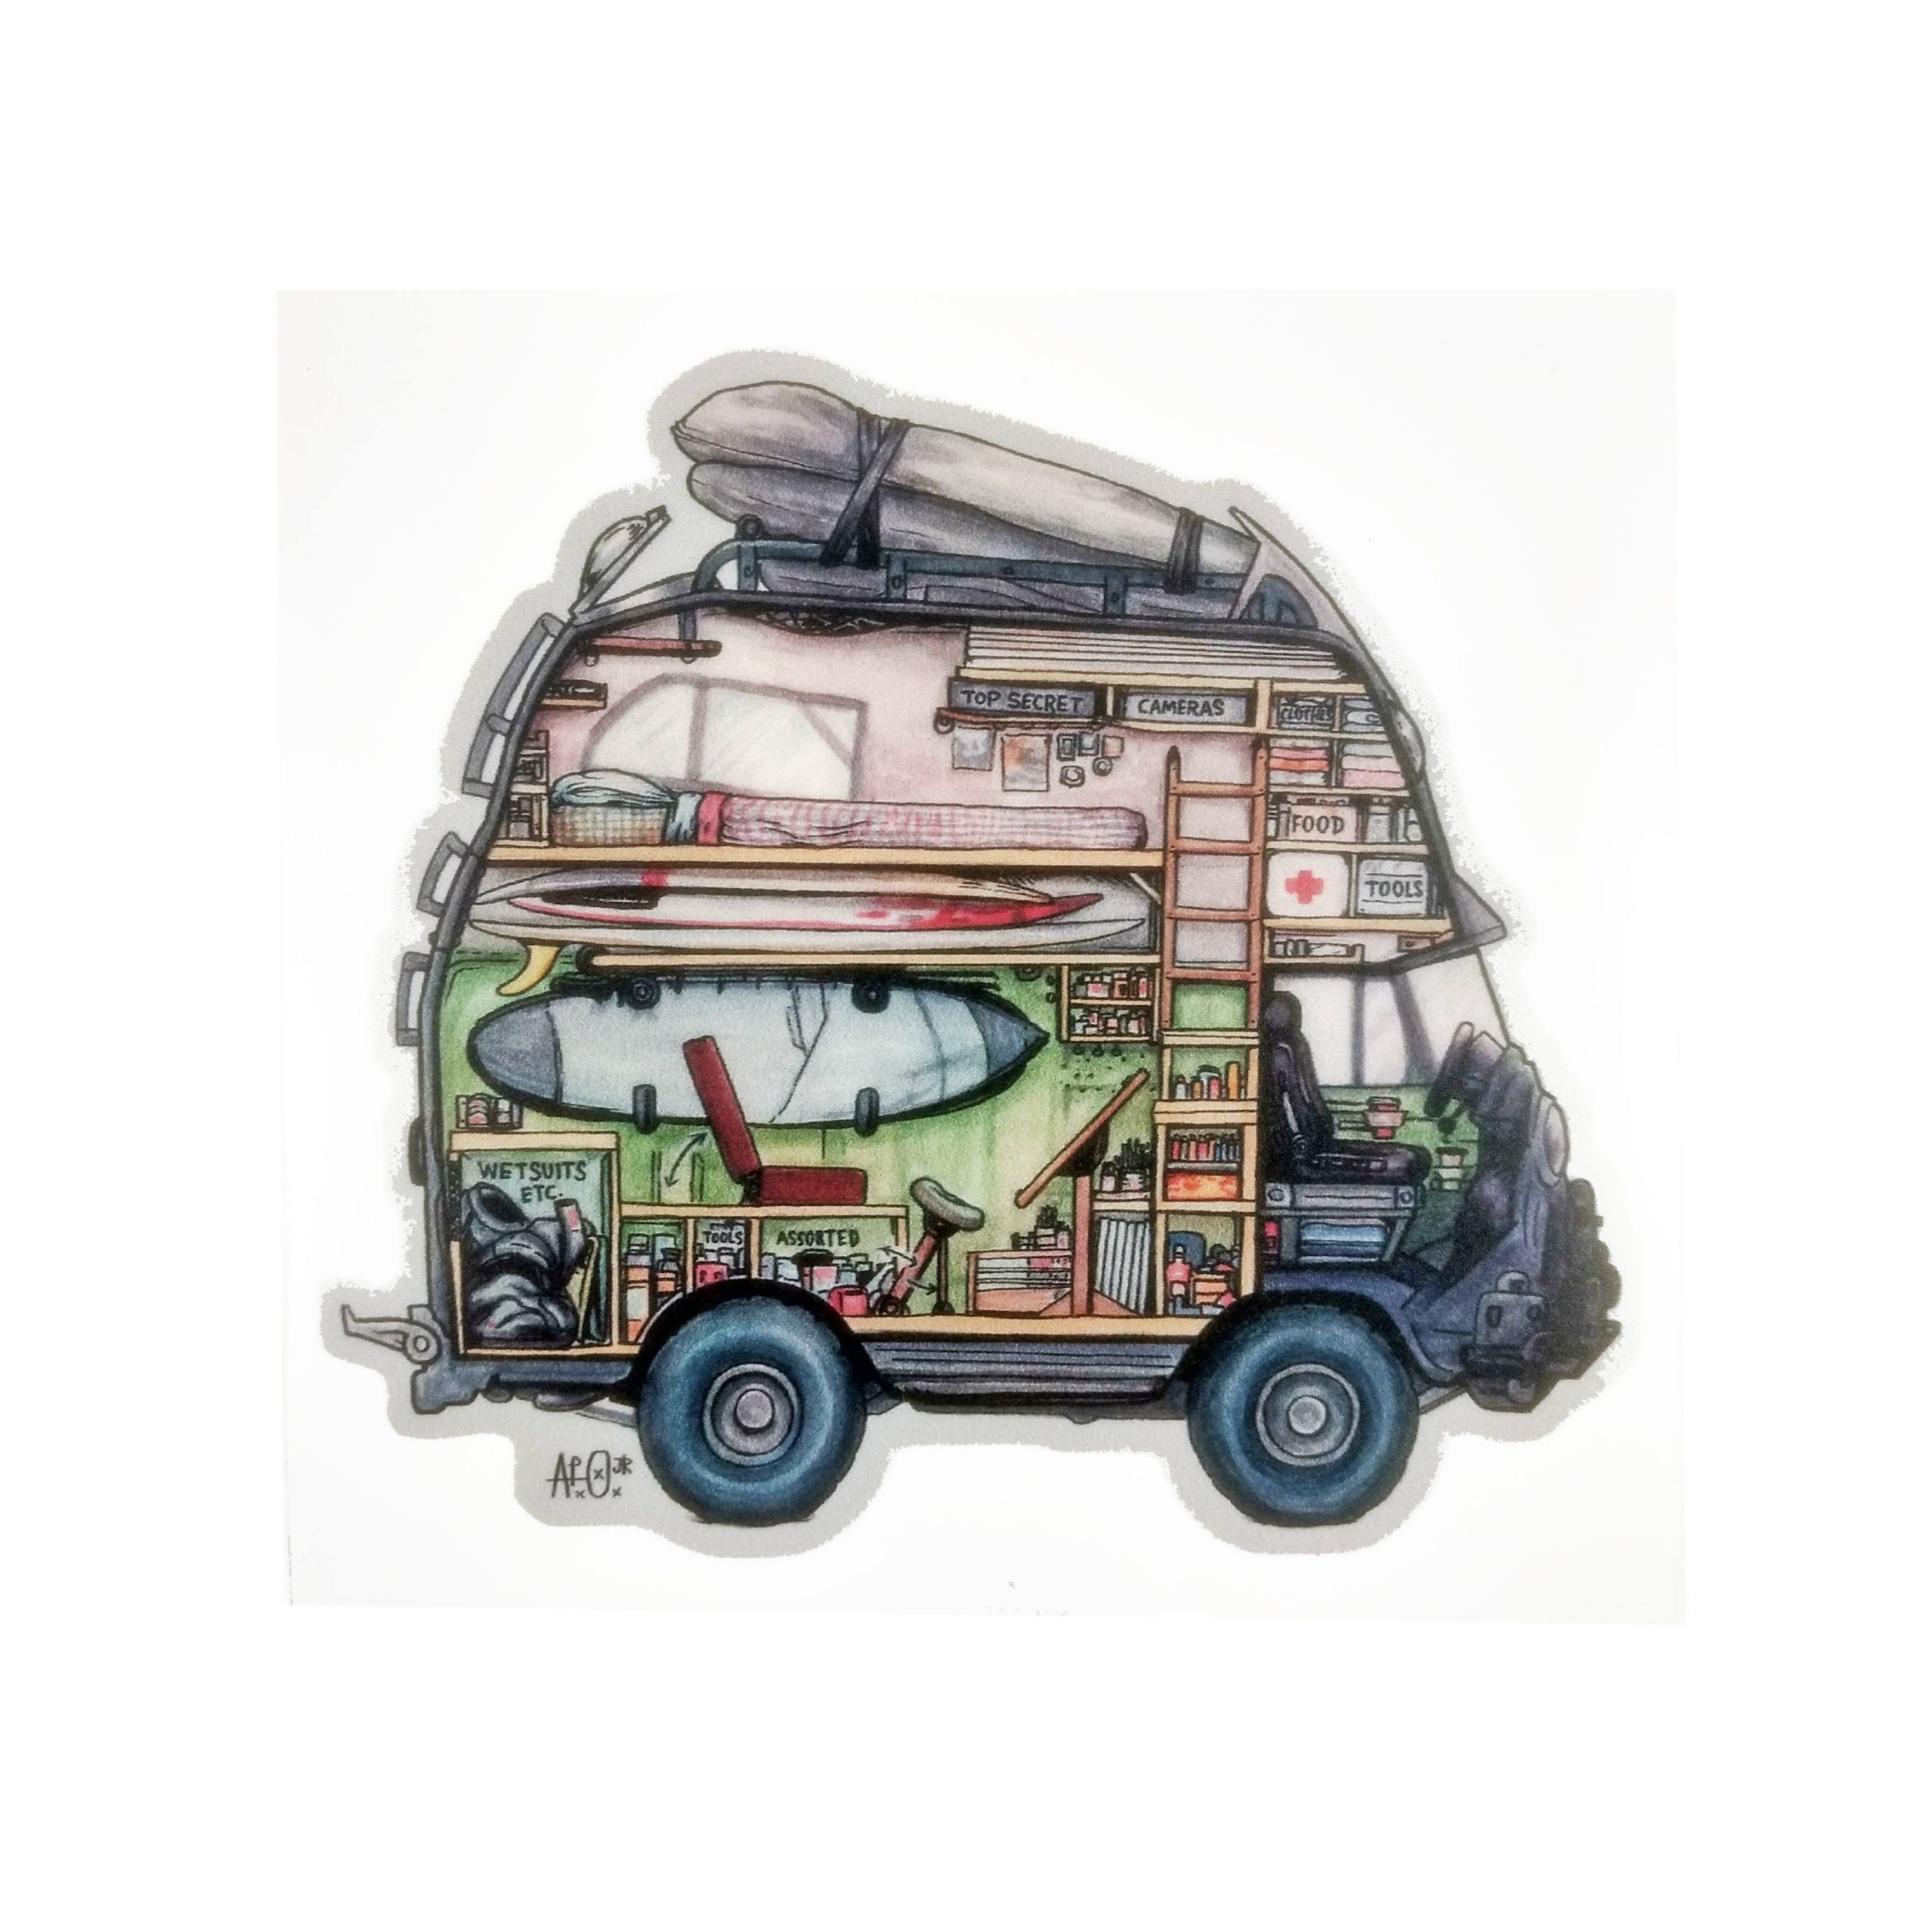 Dream Van Sticker - by AlortizJr